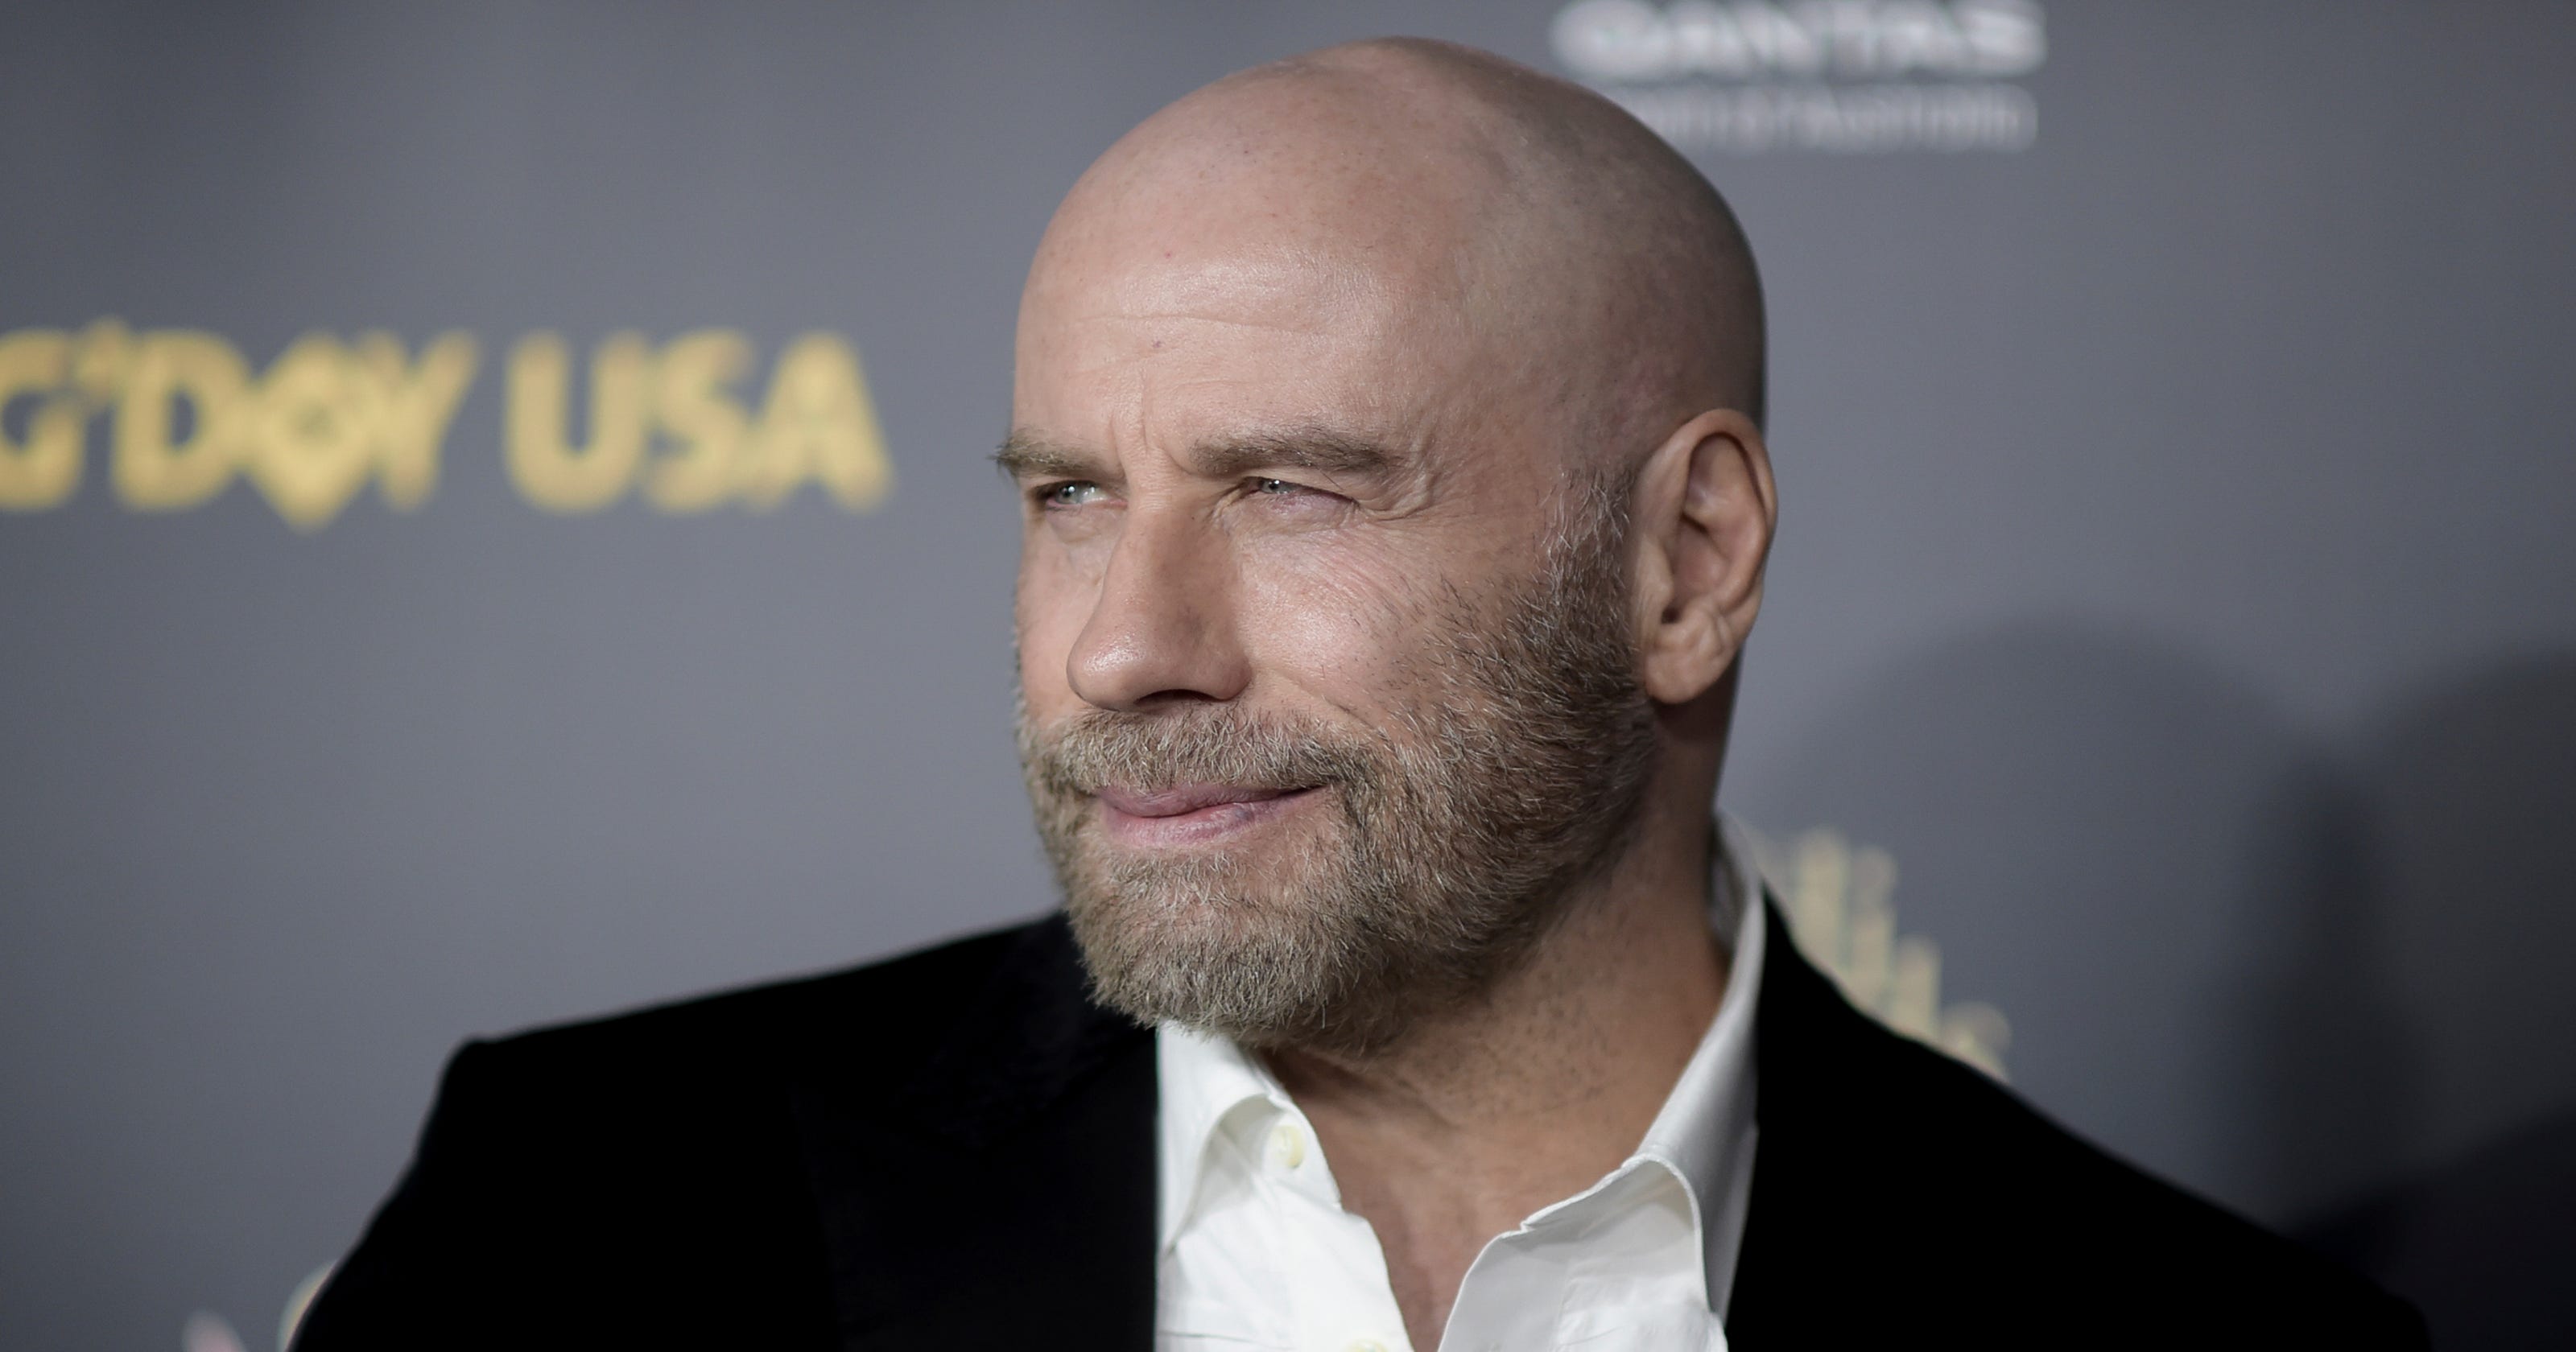 John Travolta: Bald head news is bigger than Oscar flub, credits Pitbull